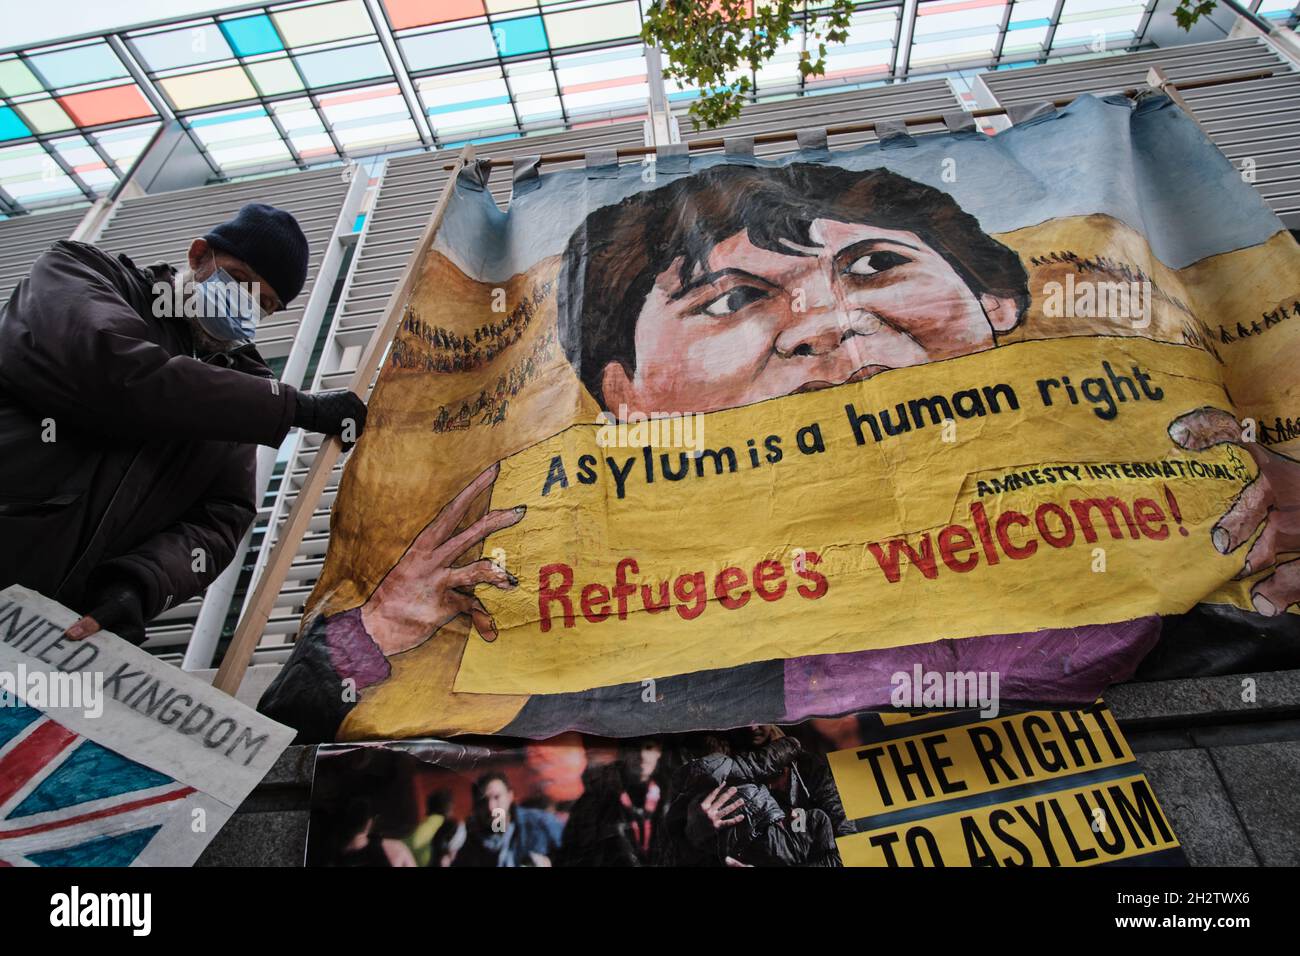 LONDON, UK. 23rd October 2021. Refugees Welcome demo by Amnesty International UK. Credit: Chiara Fabbro Stock Photo